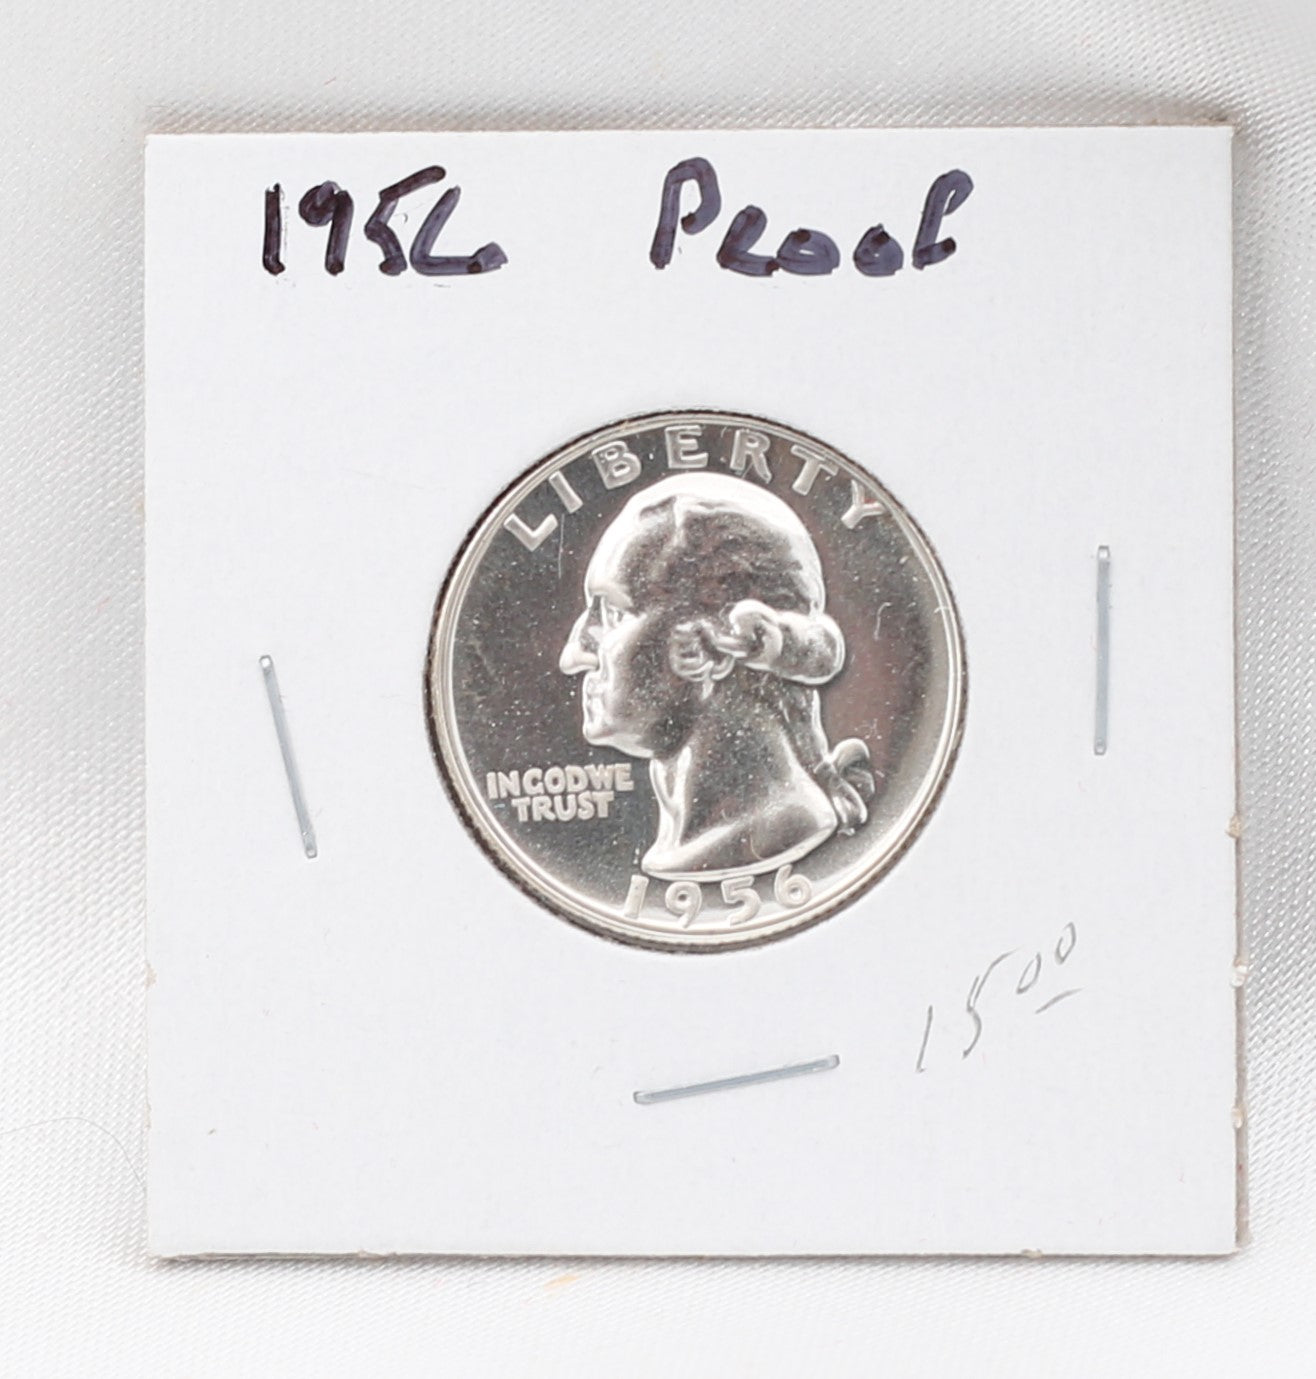 1956 Proof Silver Quarter